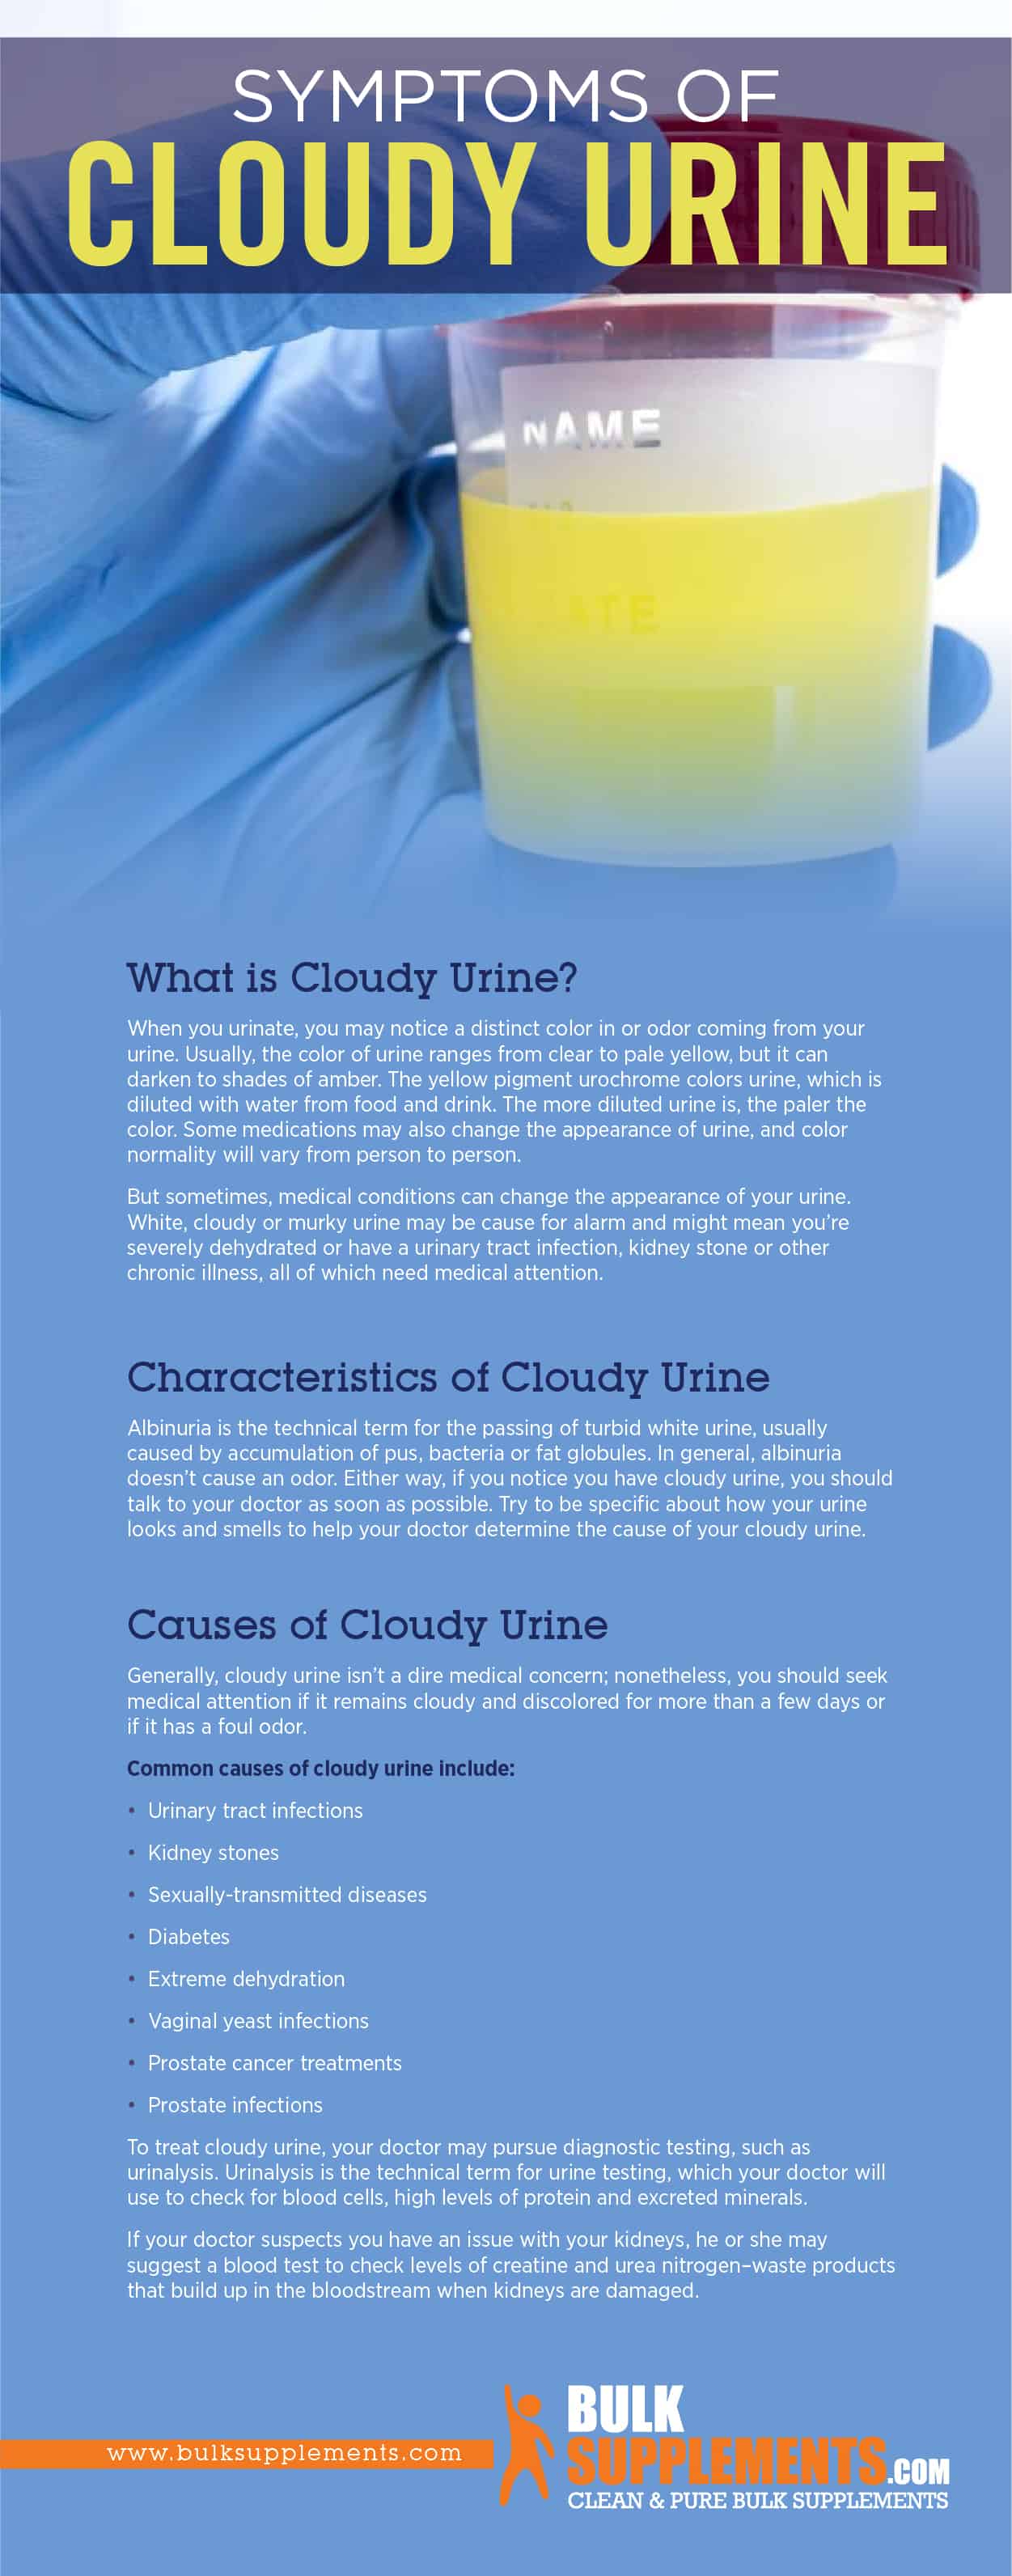 Cloudy Urine Symptoms